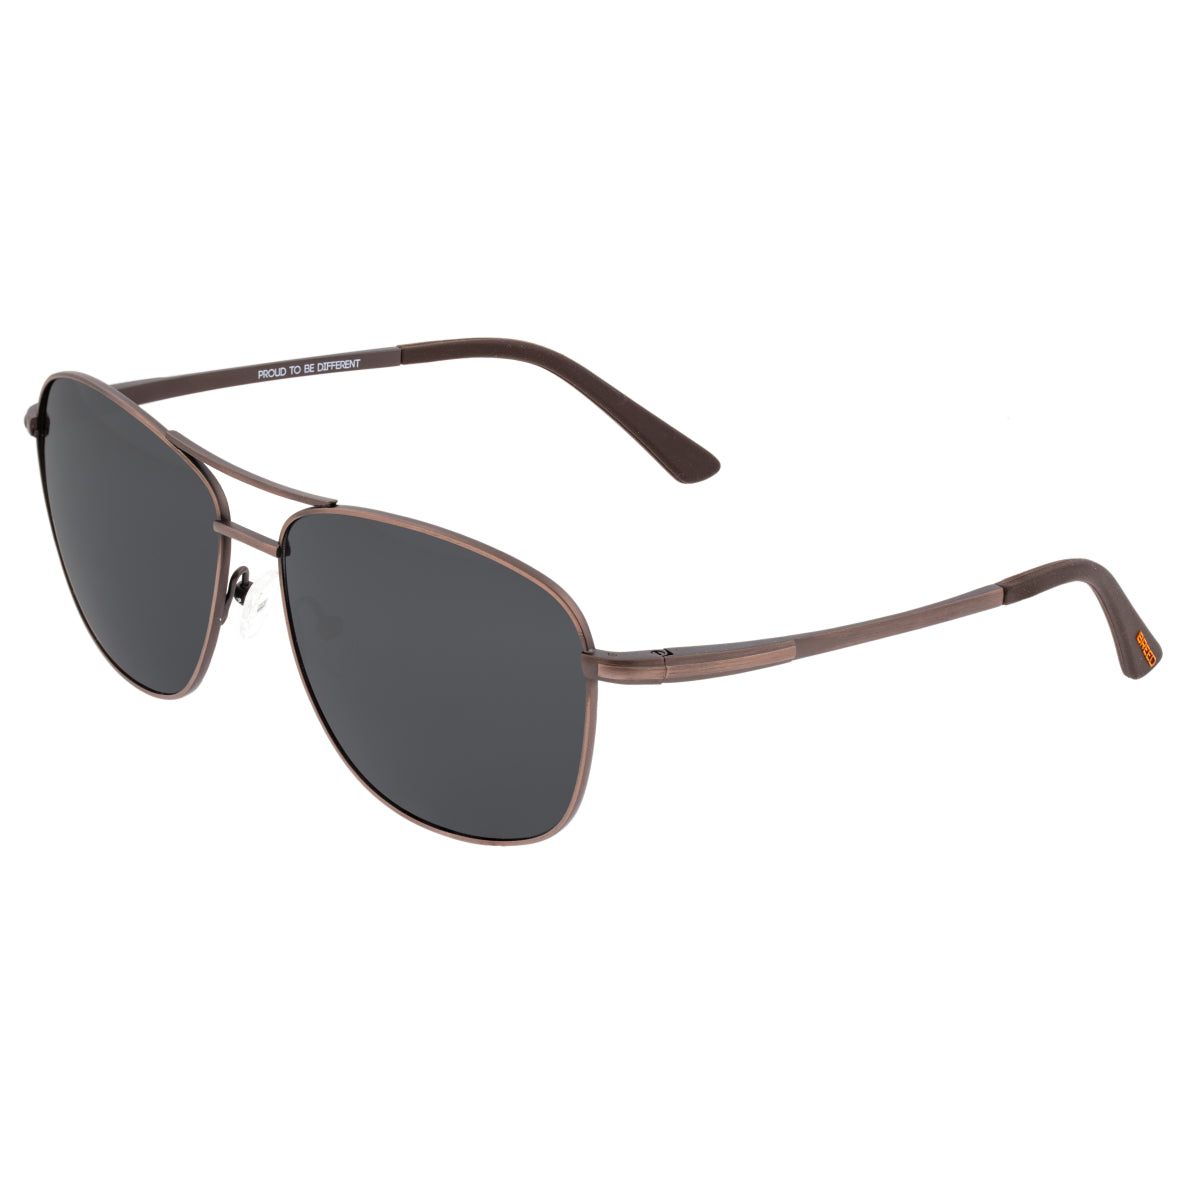 Breed Hera Titanium Polarized Sunglasses - Brown//Black - BSG054RB